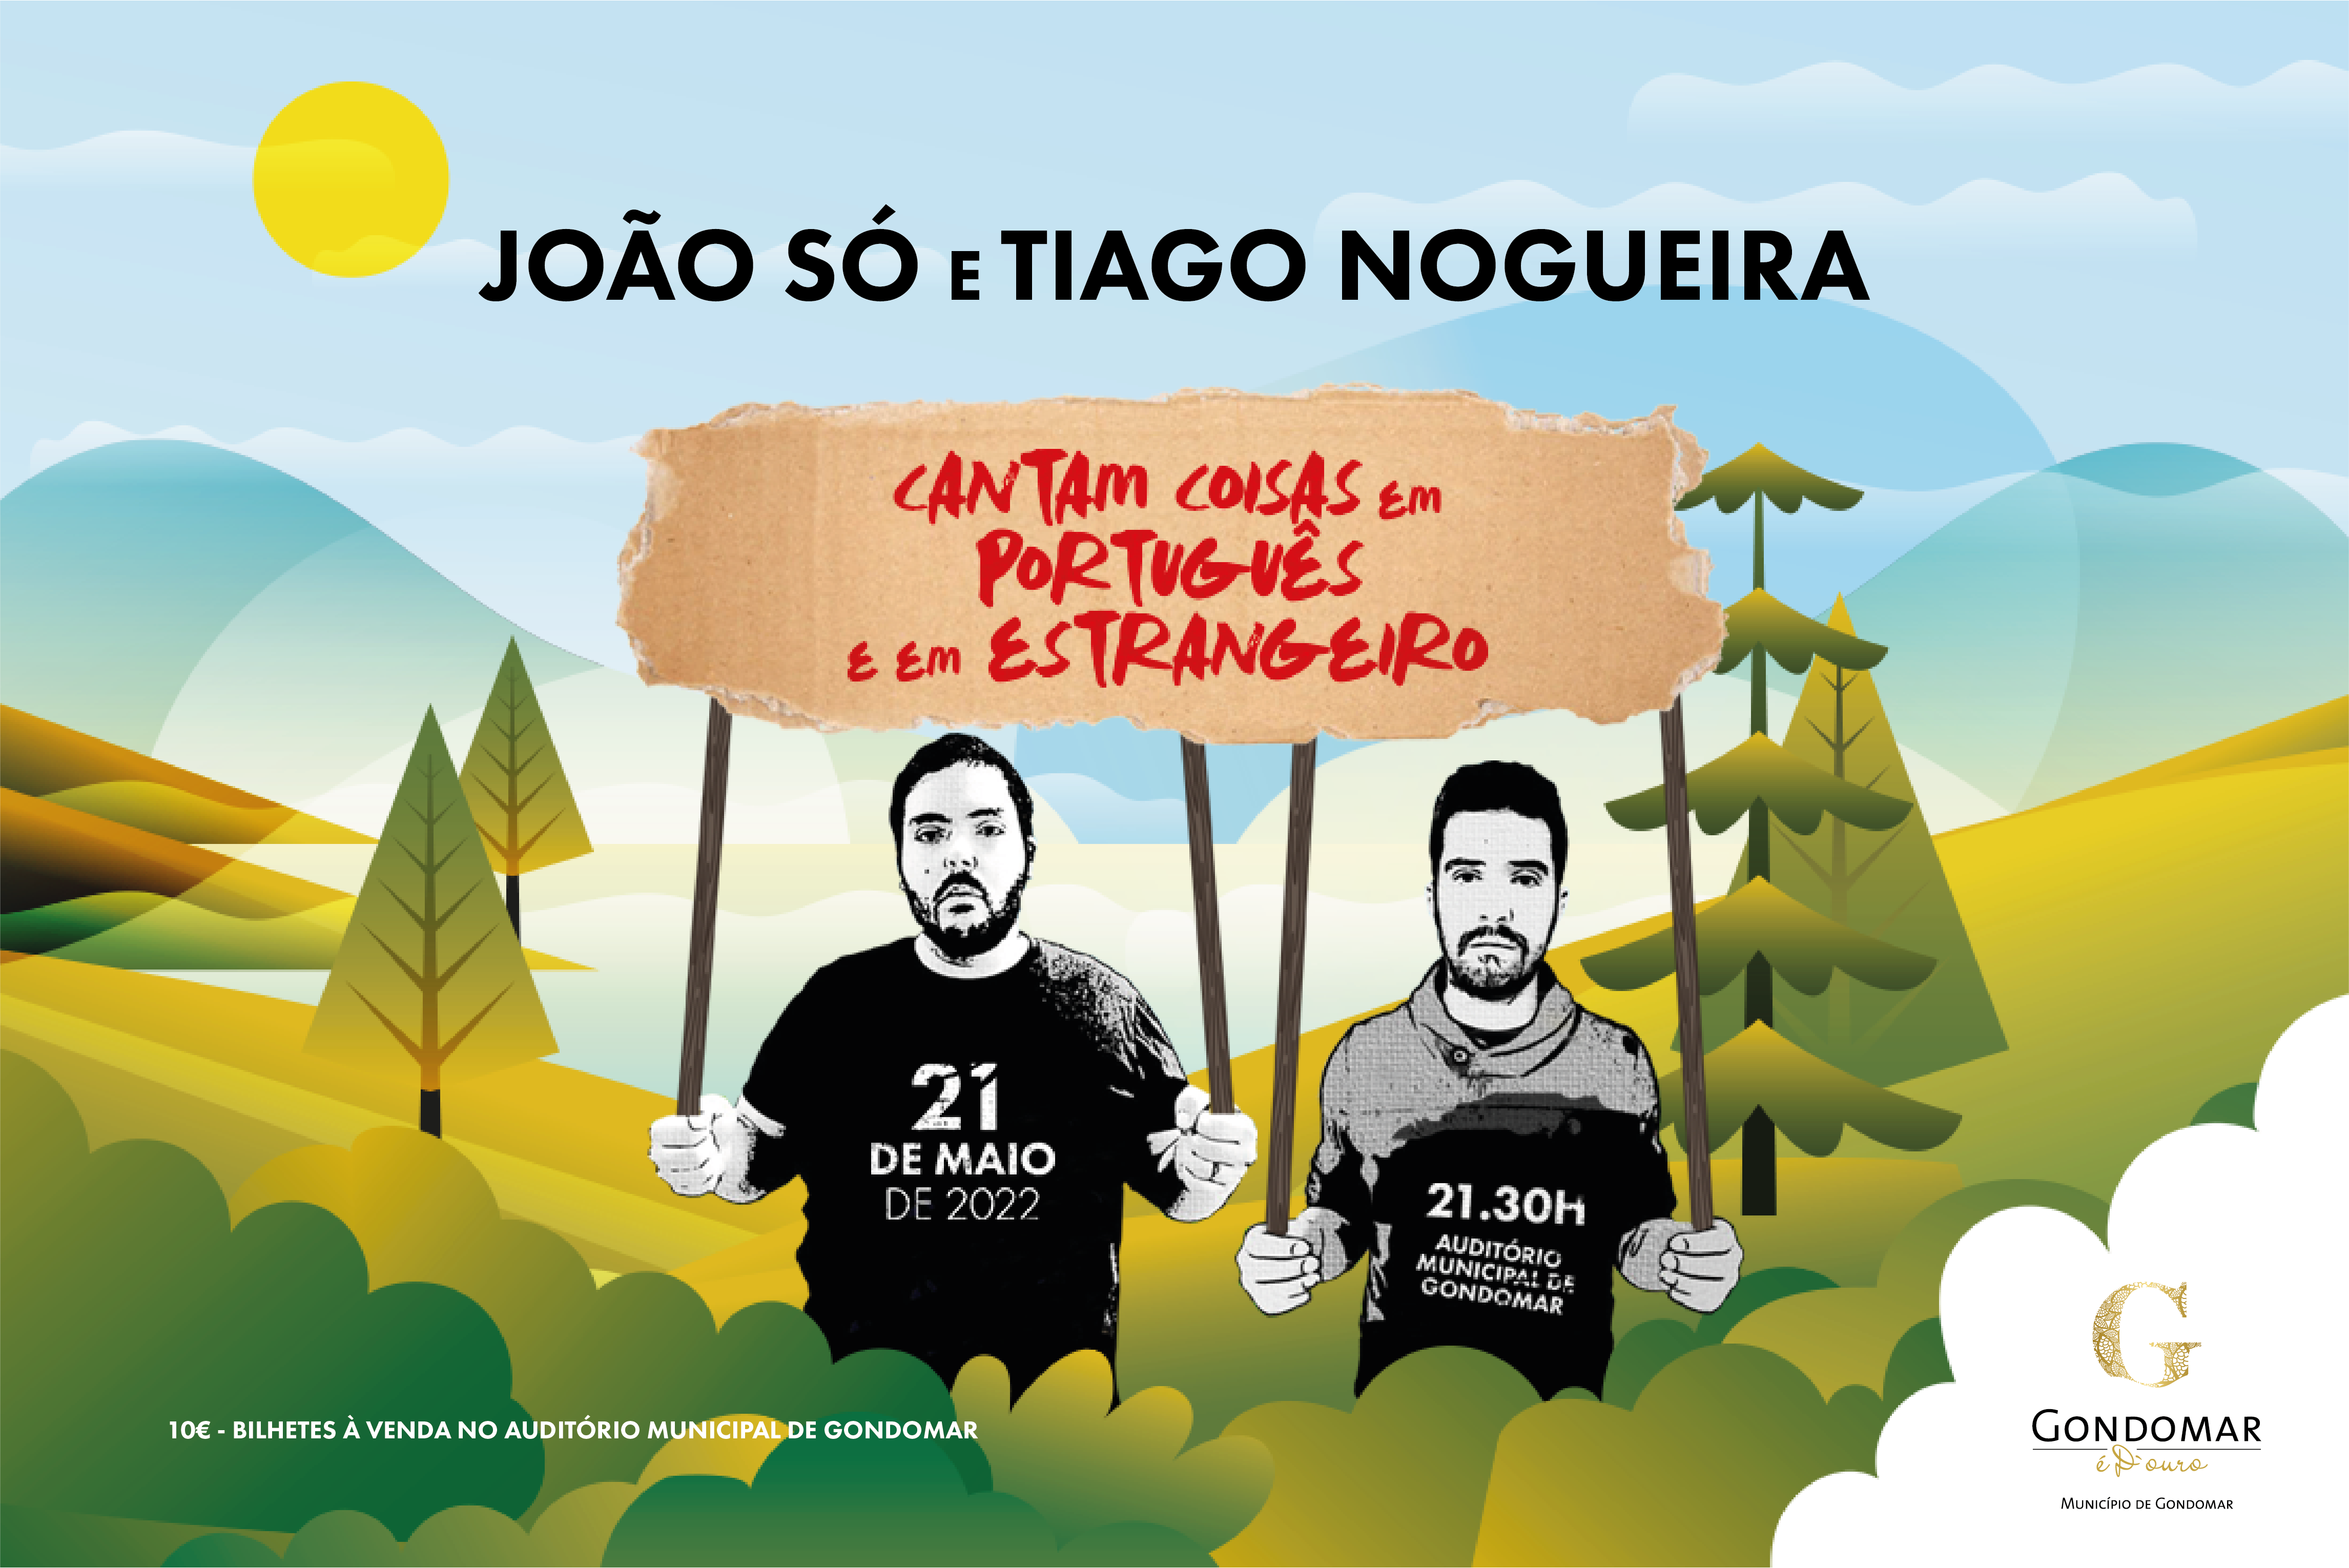 João Só e Tiago Nogueira